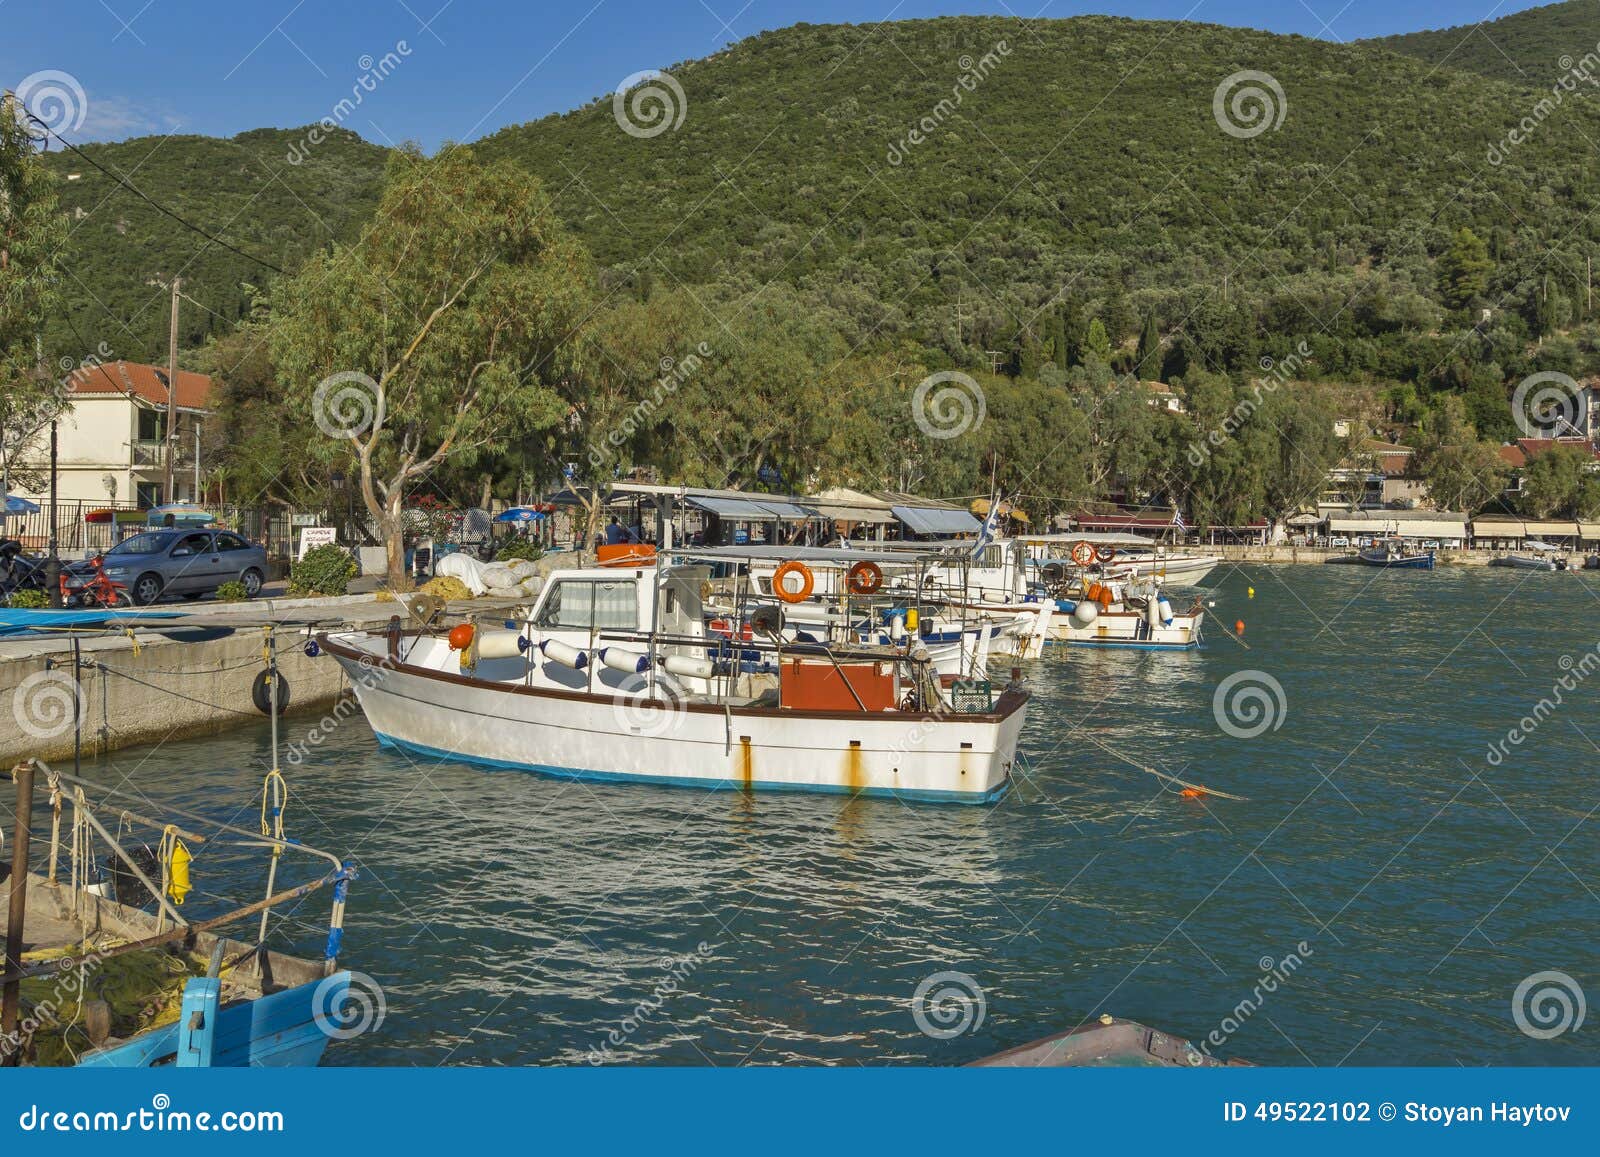 Port of Vasiliki, Lefkada, Ionian Islands Editorial Photography - Image ...